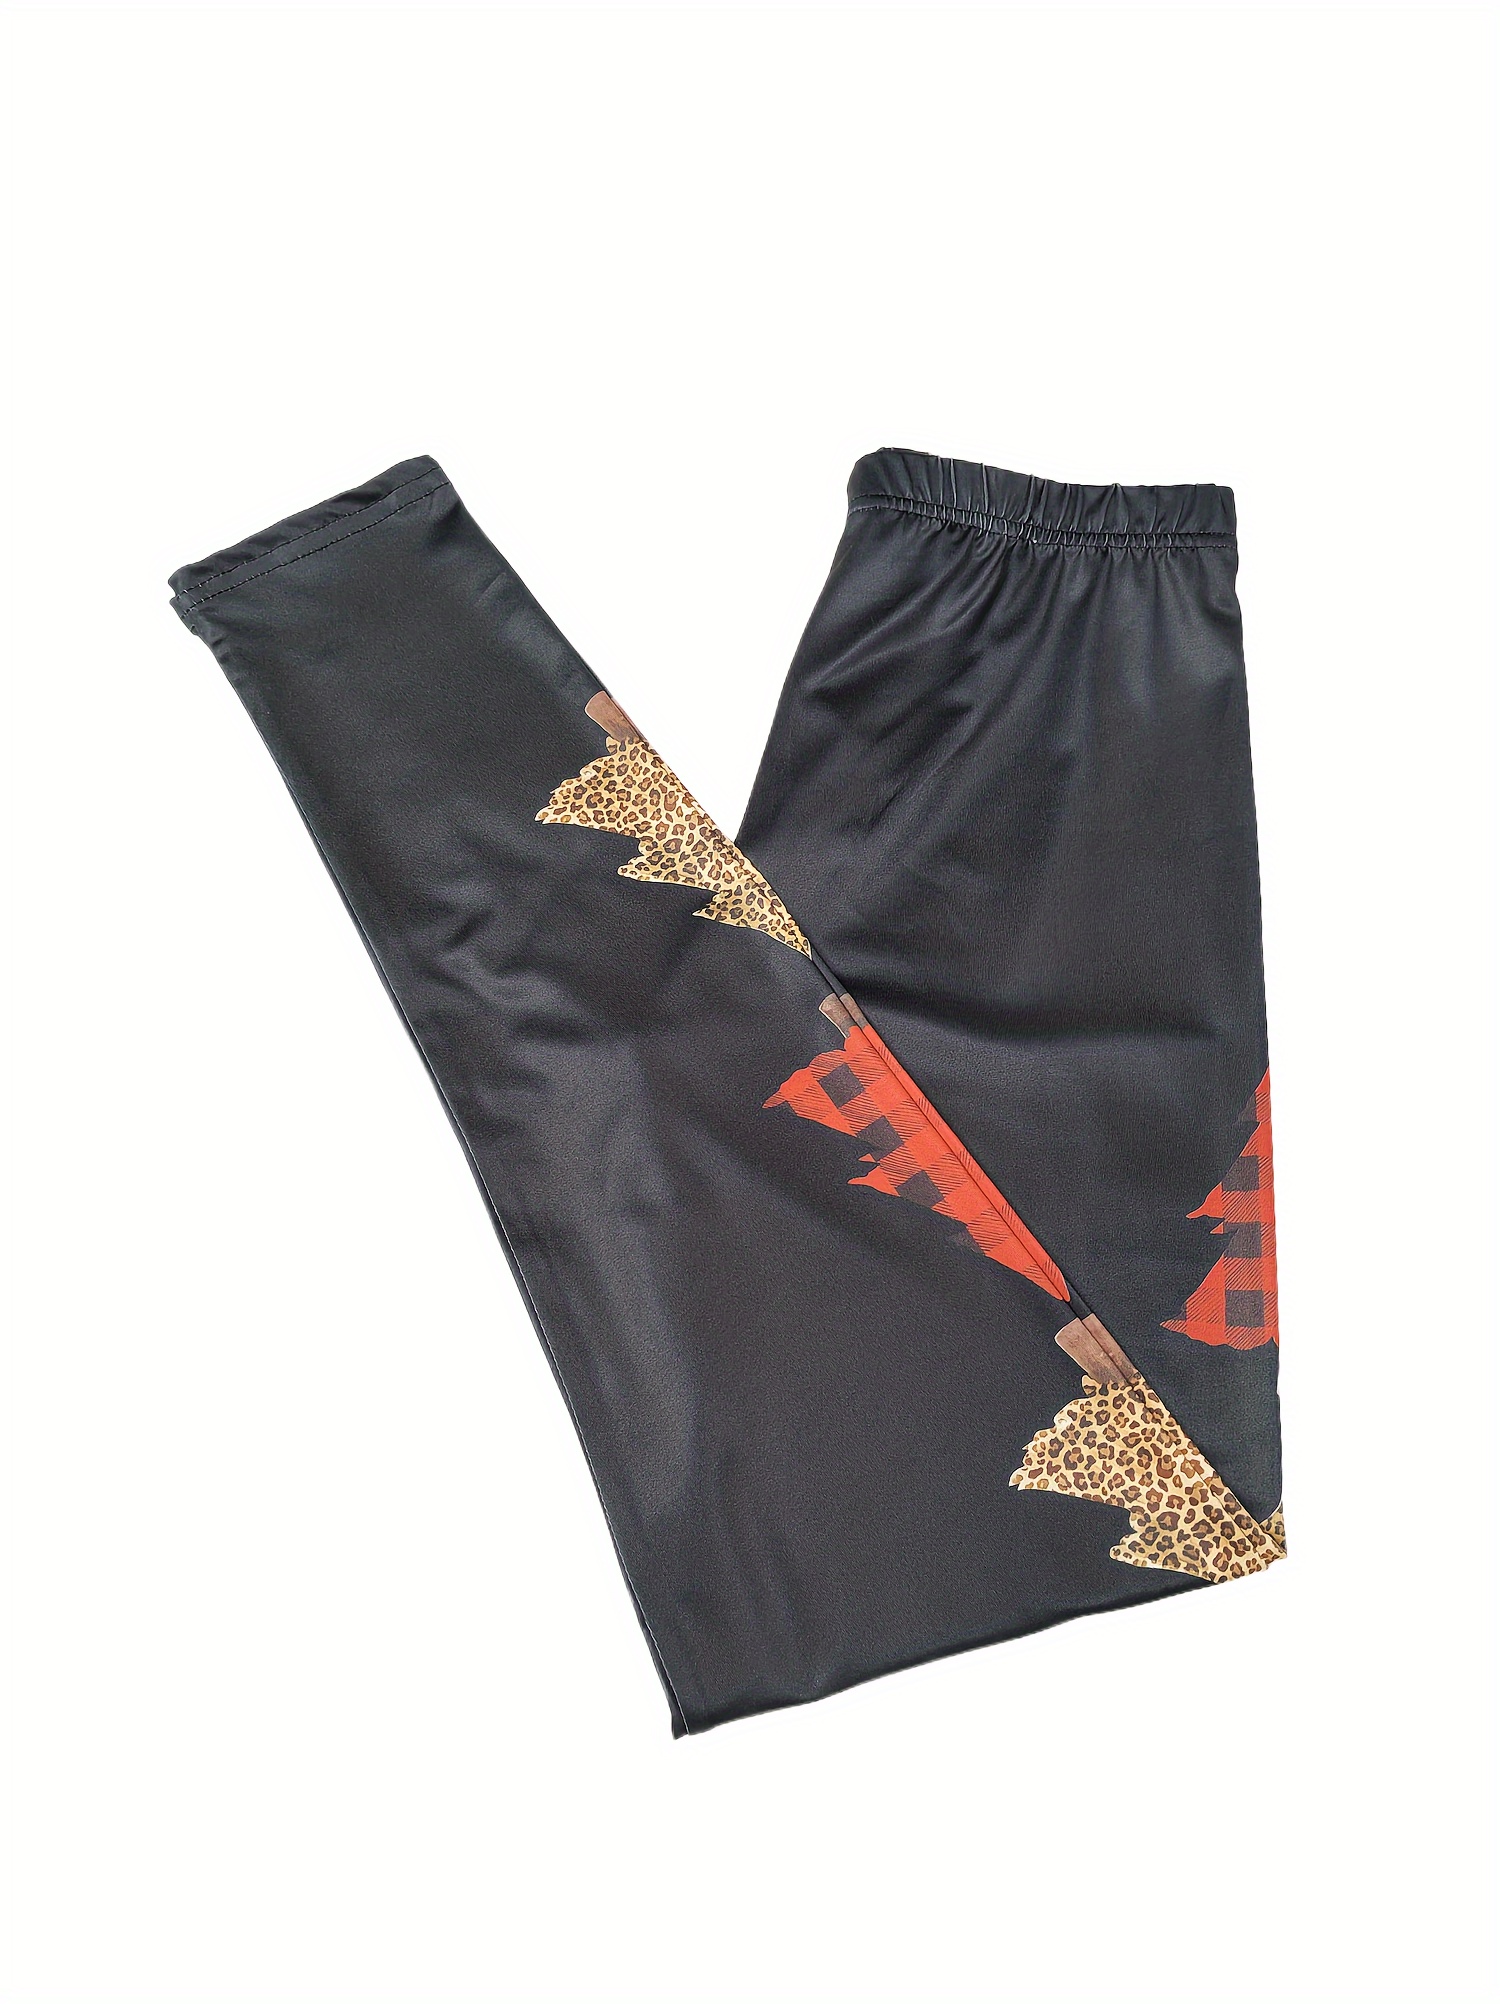 Leopard Christmas Tree Print Leggings, Casual High Waist Skinny Leggings,  Women's Clothing